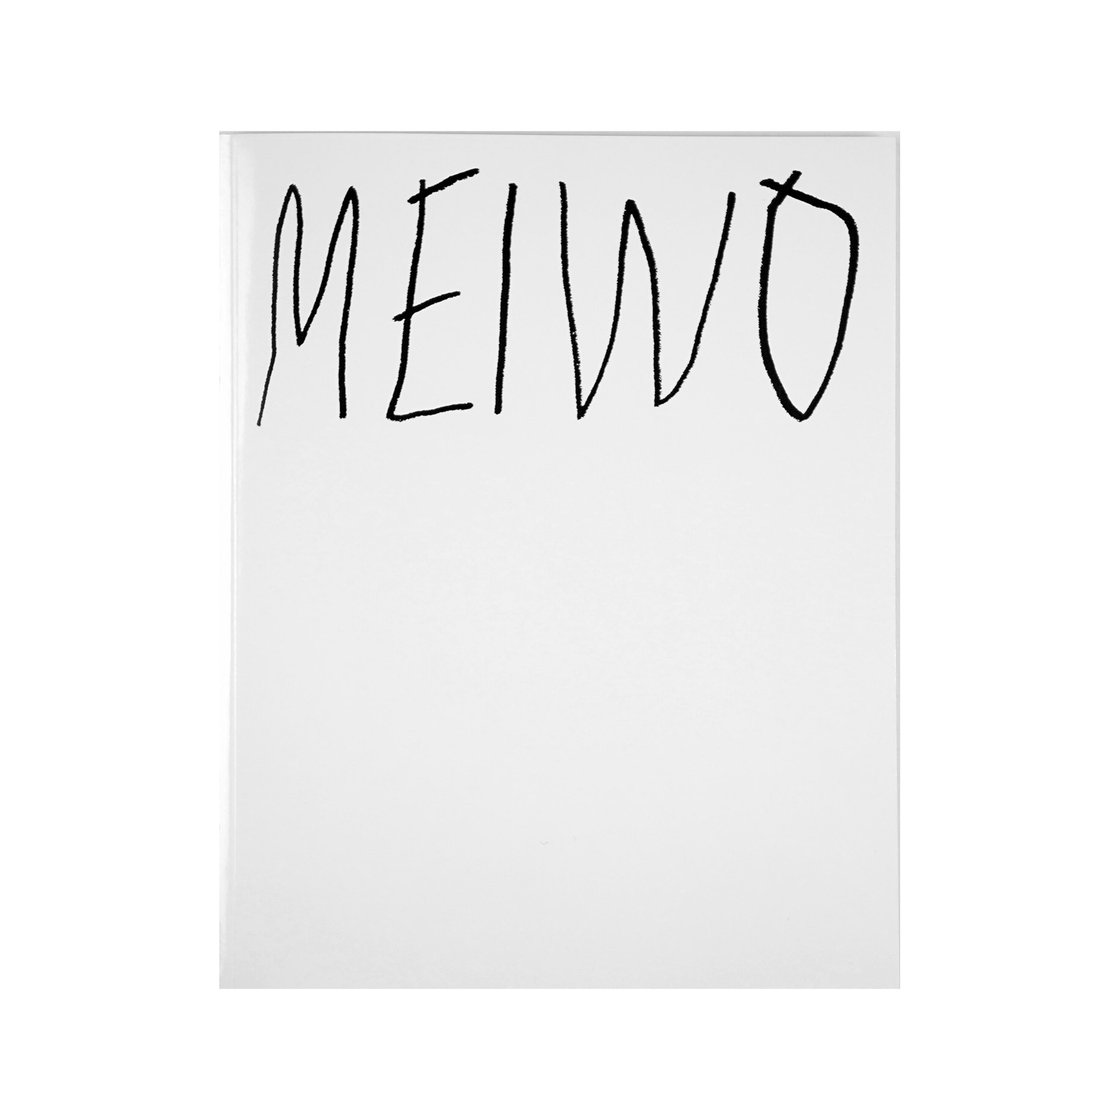 Image of MEIWO - Jacopo Benassi